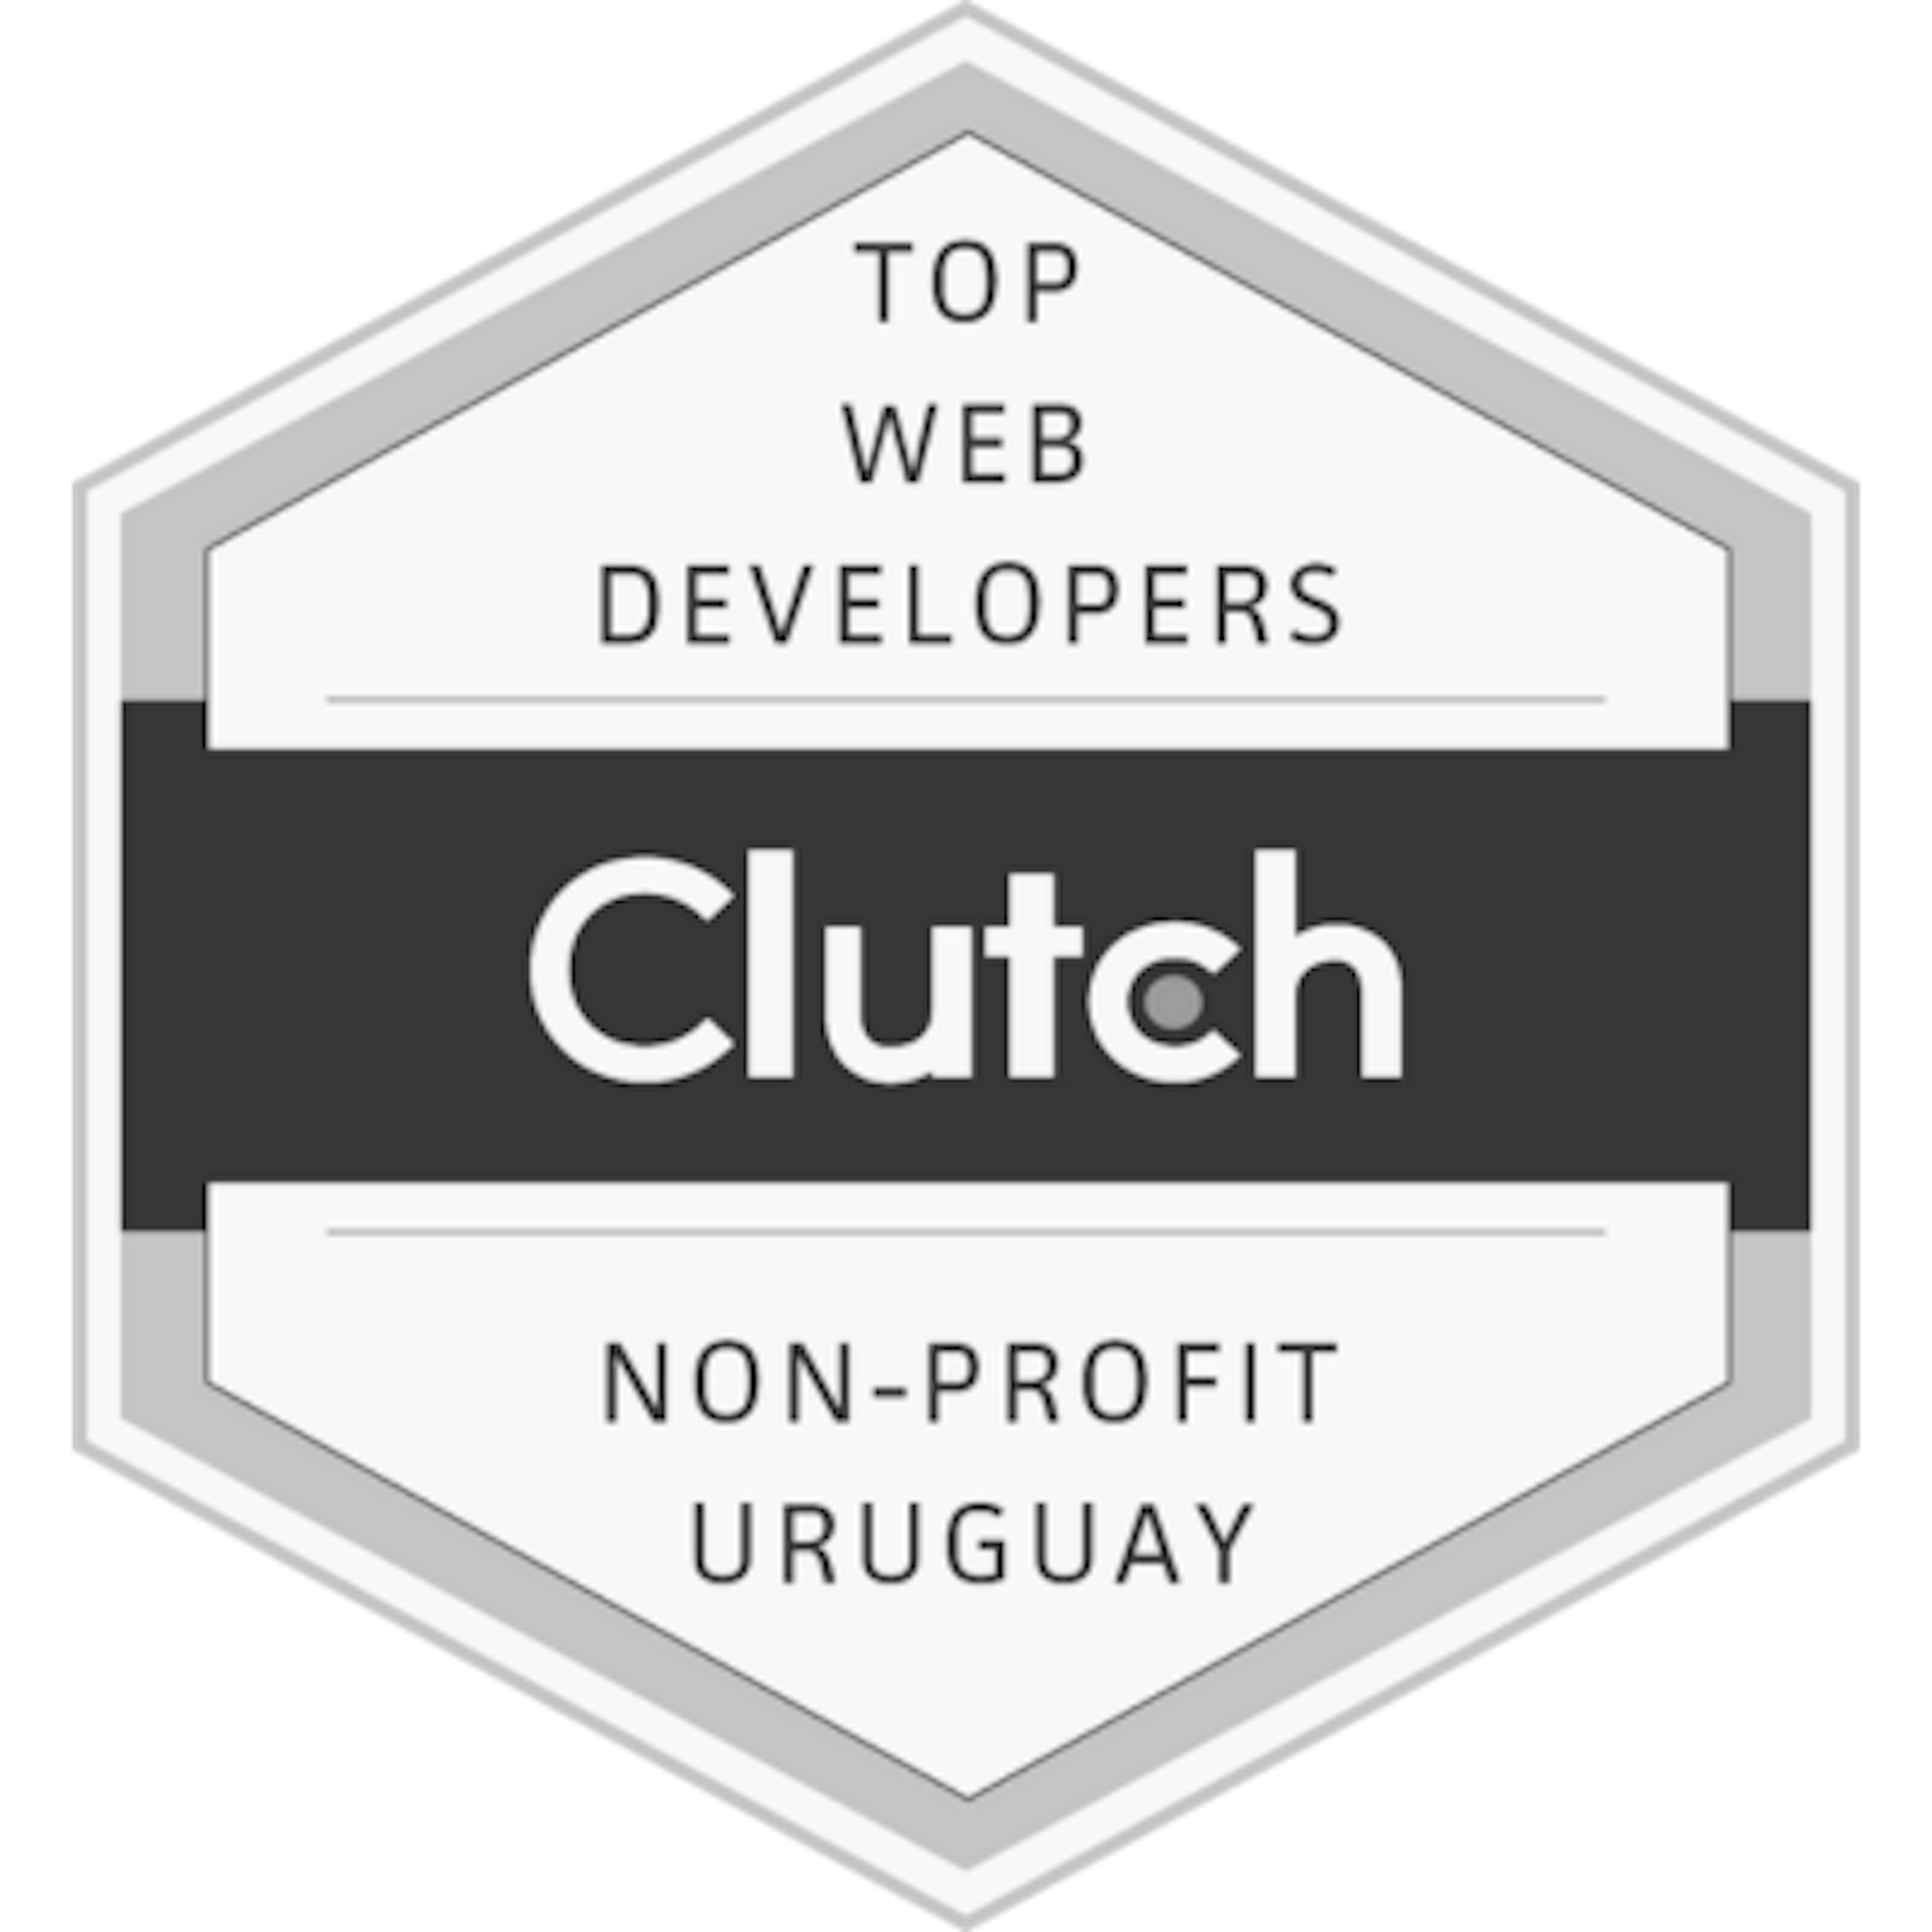 Top Web Developers - Non-Profit Uruguay